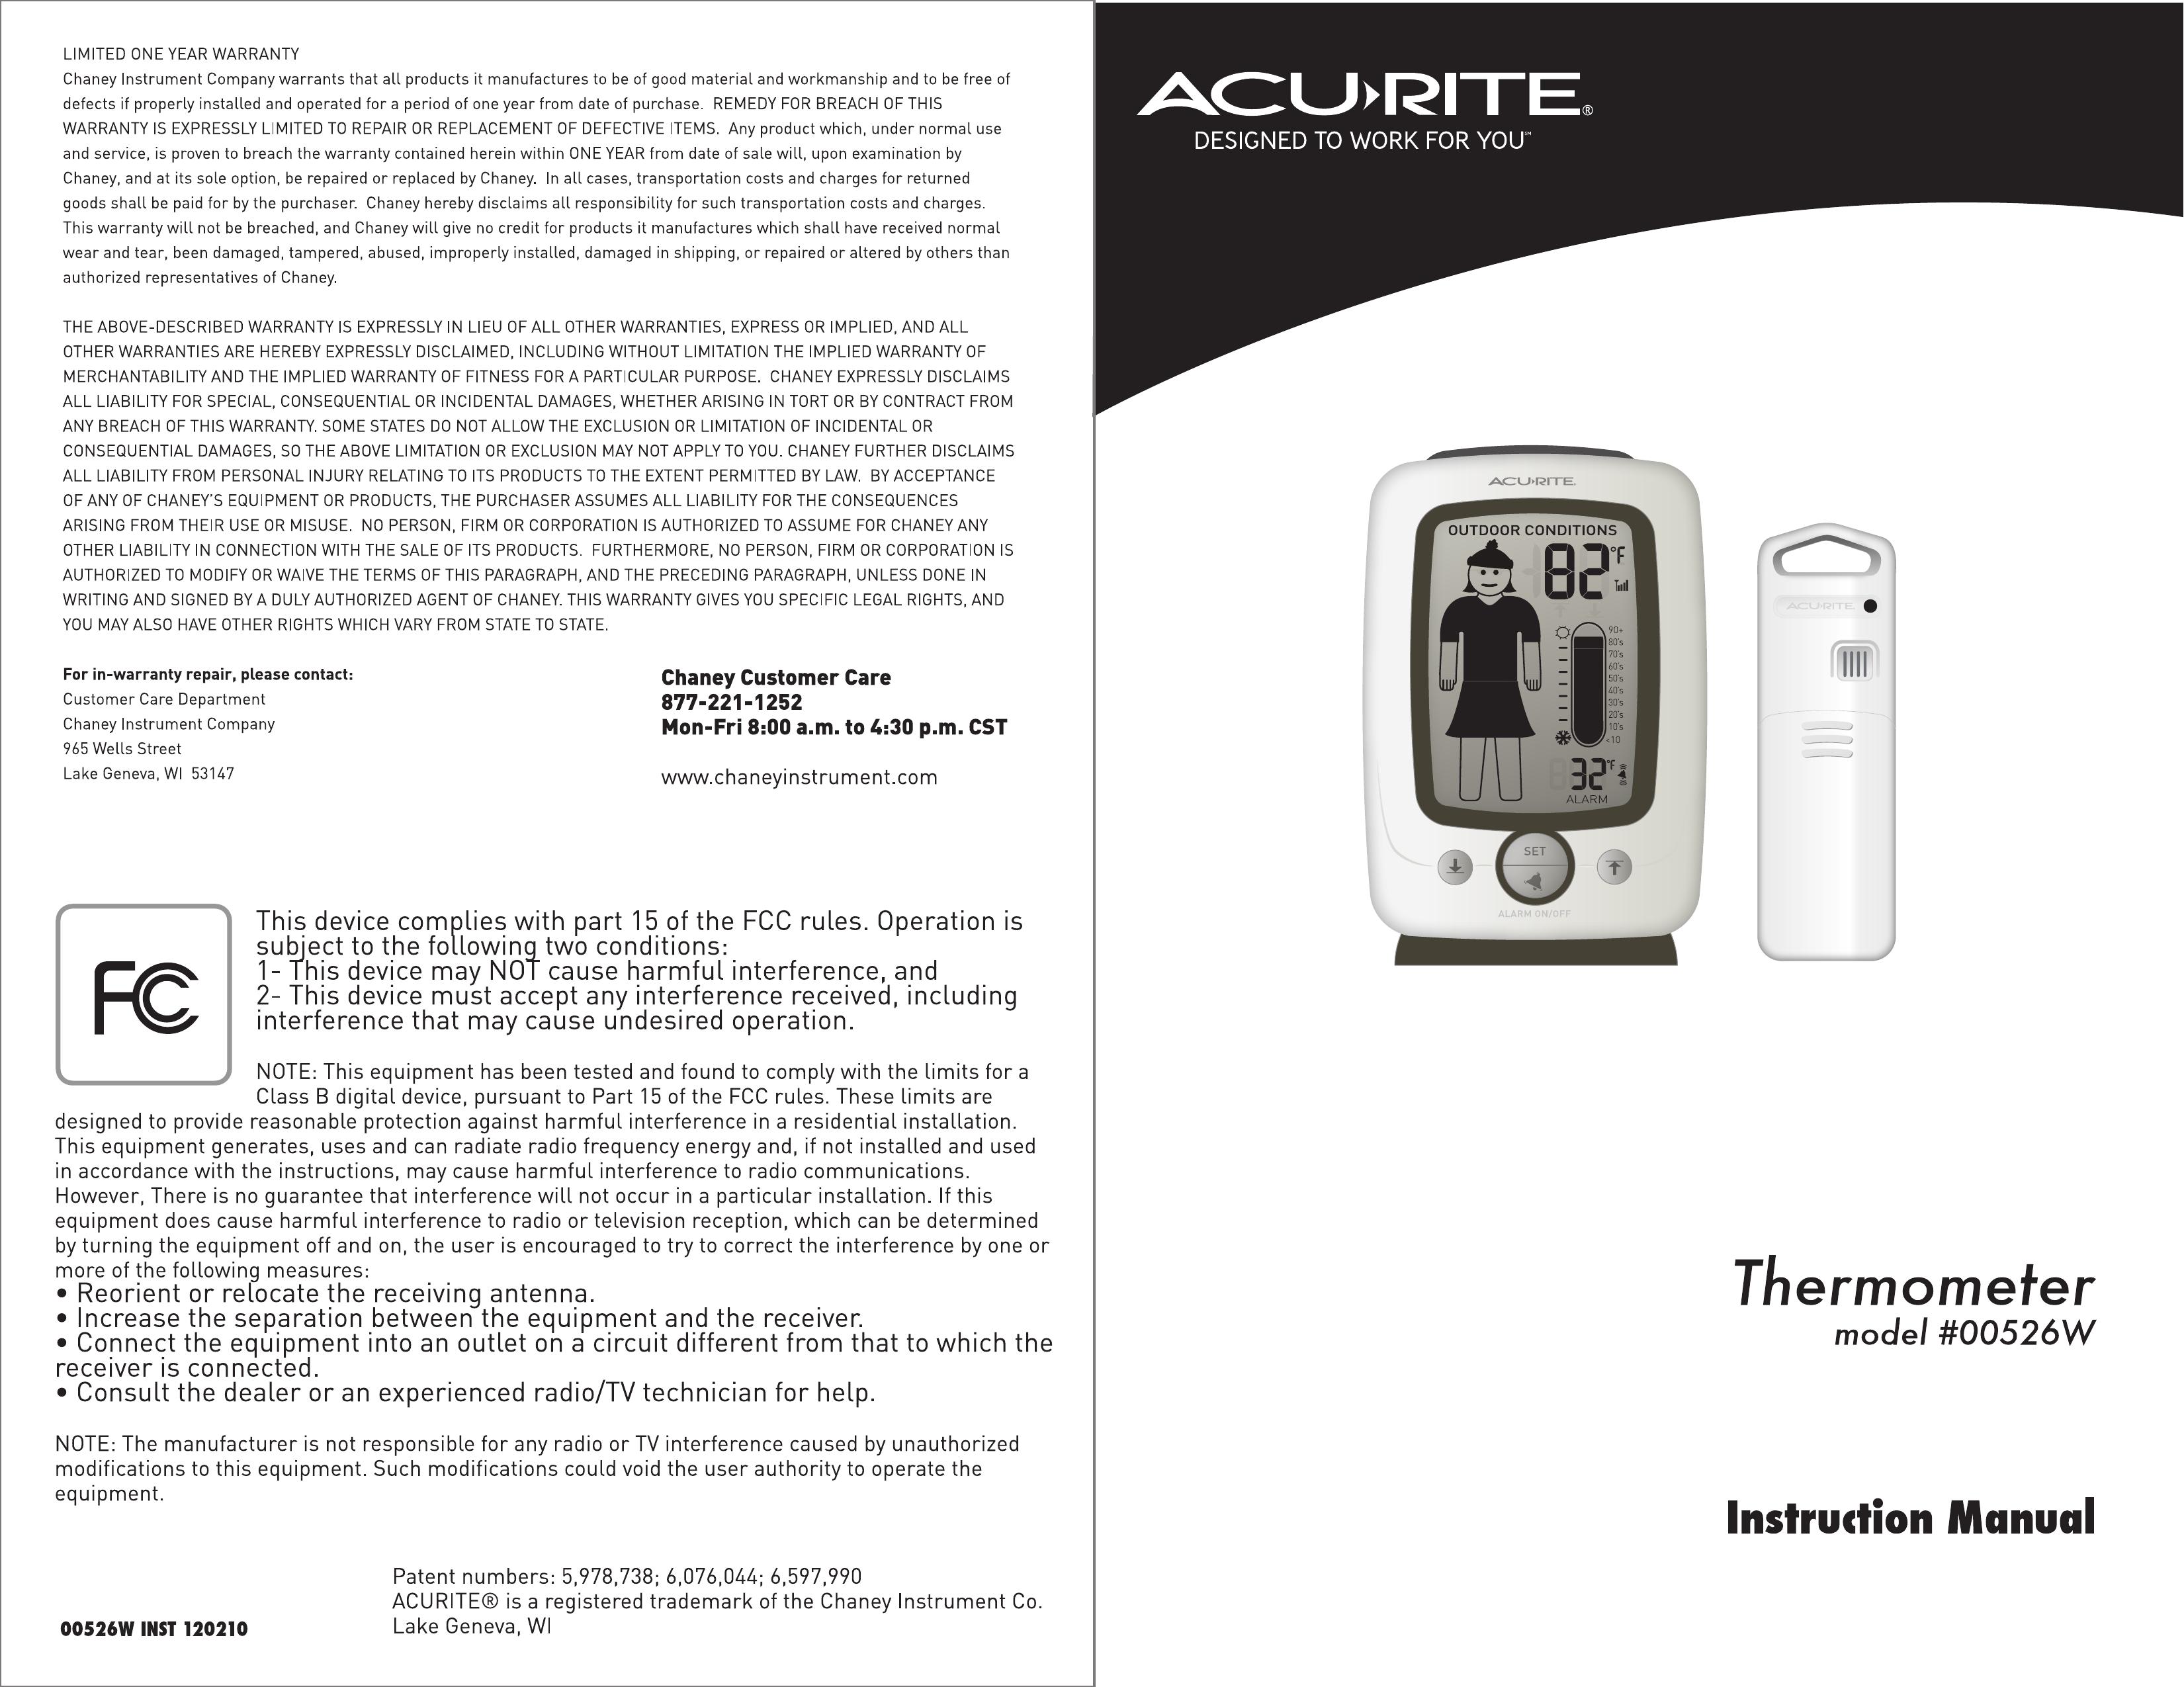 Acu-Rite 00526W Thermometer User Manual